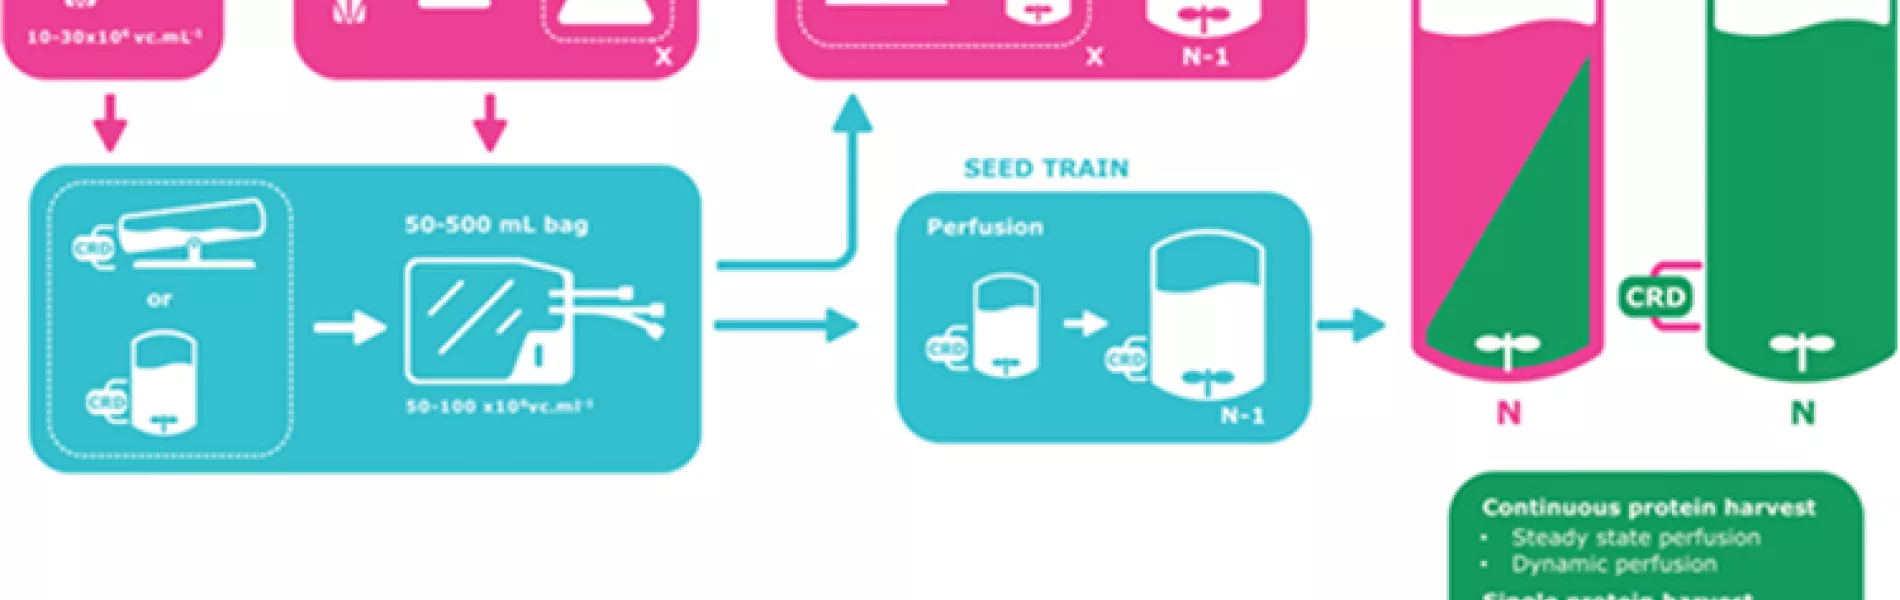 BioContinuum™ Seed Train Platform